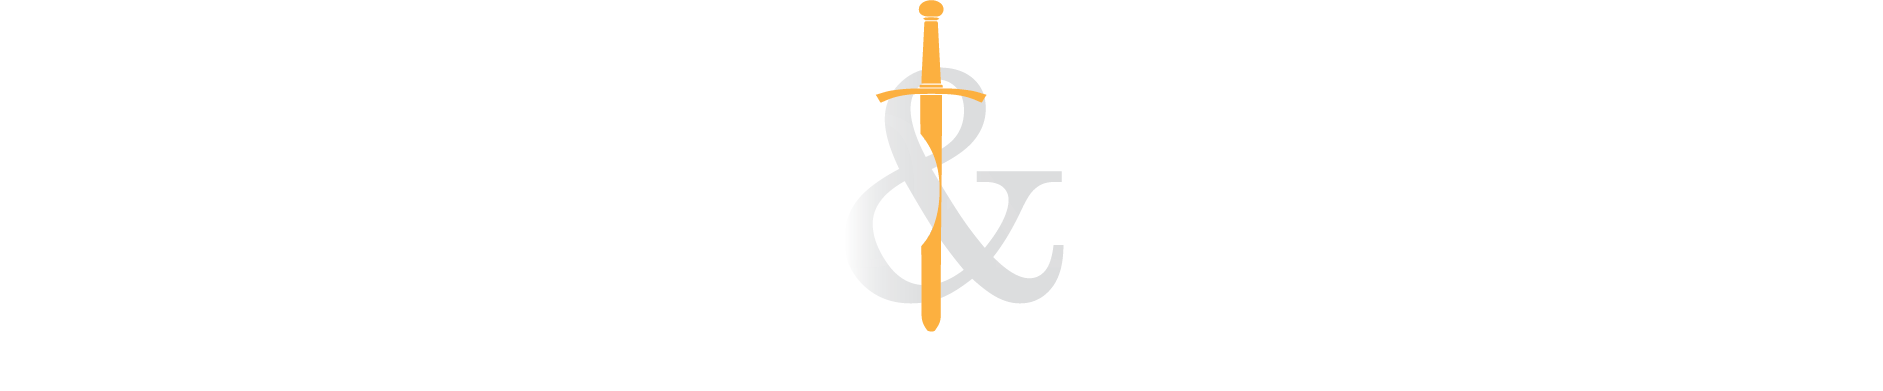 Dwyer & Knight Law Firm logo